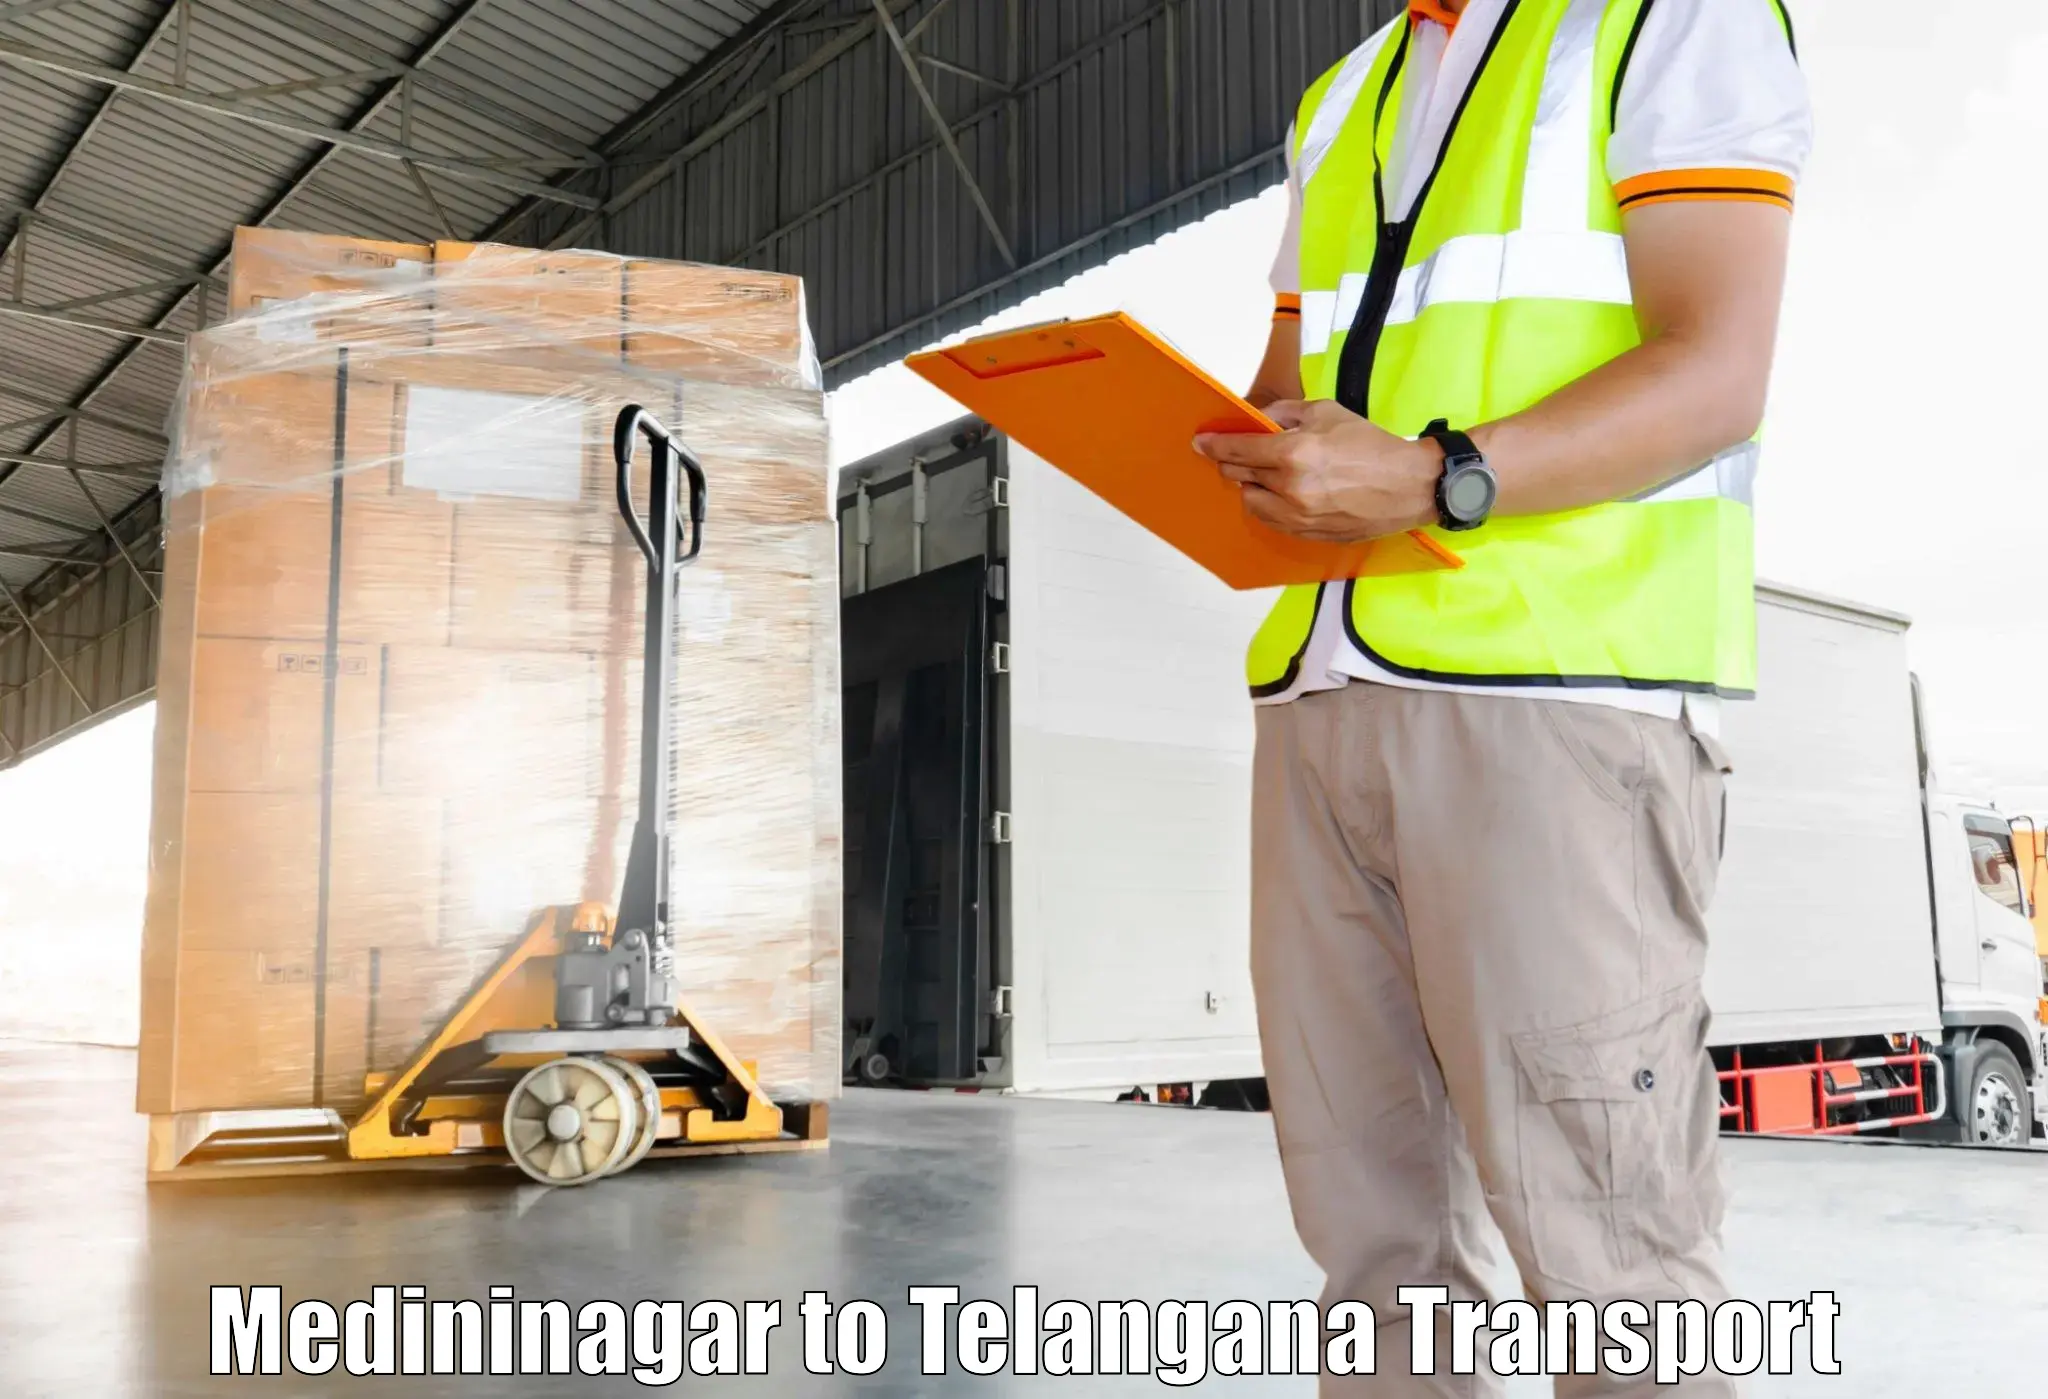 Transport in sharing Medininagar to Kamalapur